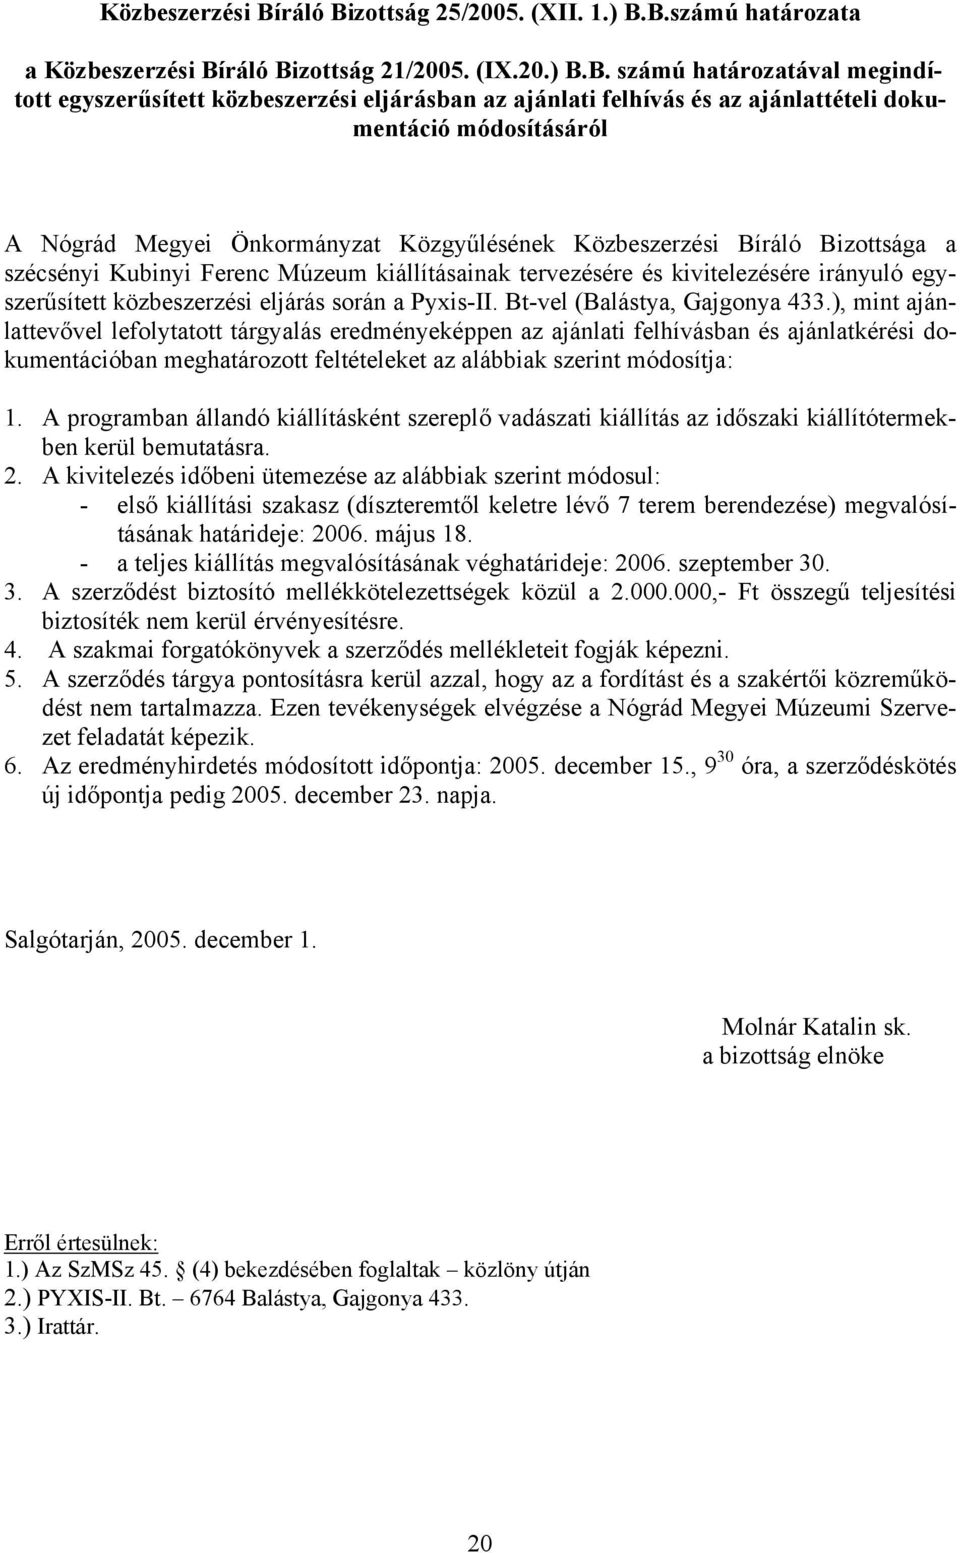 zottság 25/2005. (XII. 1.) B.